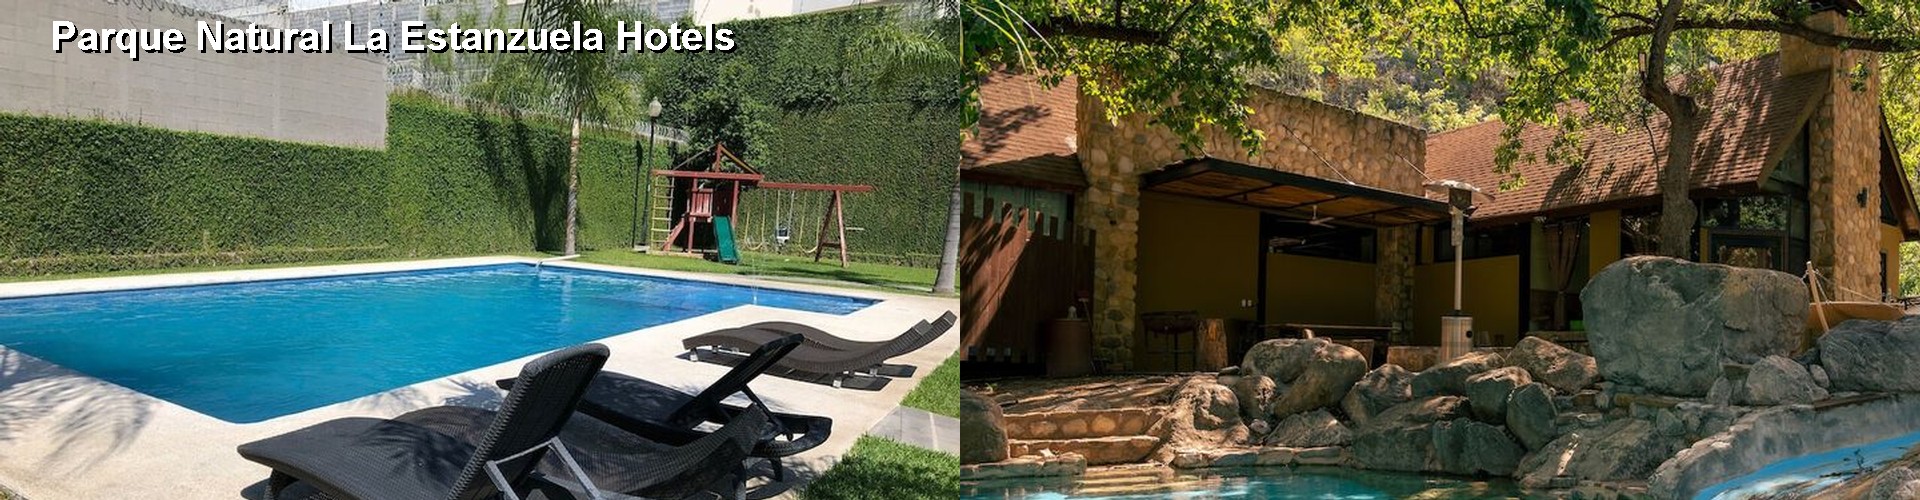 5 Best Hotels near Parque Natural La Estanzuela